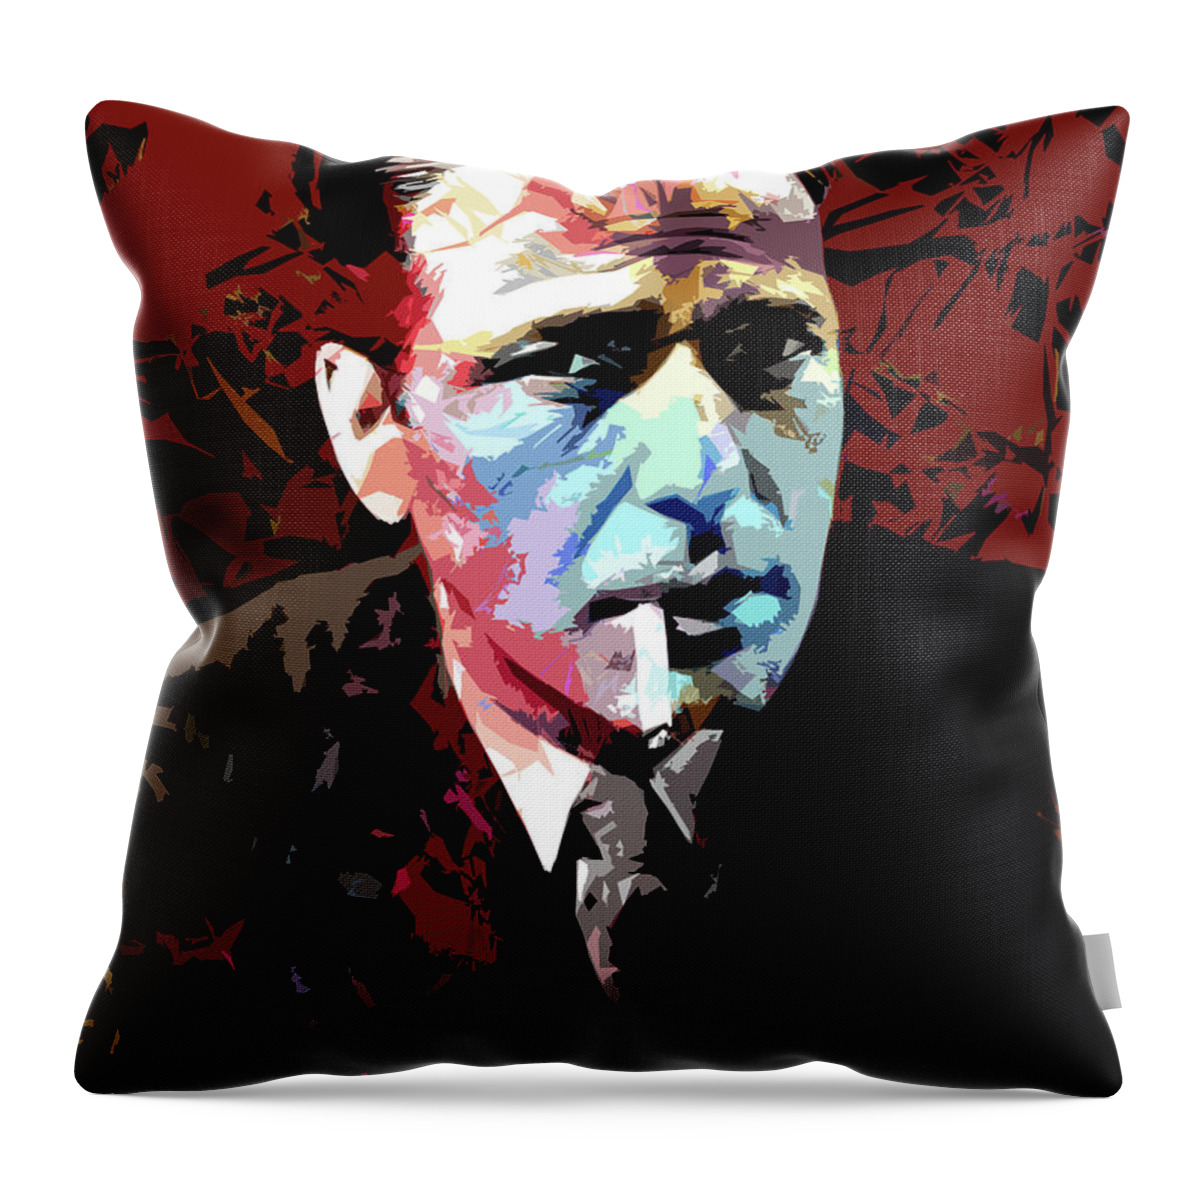 Humphrey Bogart Throw Pillow featuring the digital art Humphrey Bogart psychedelic portrait by Movie World Posters